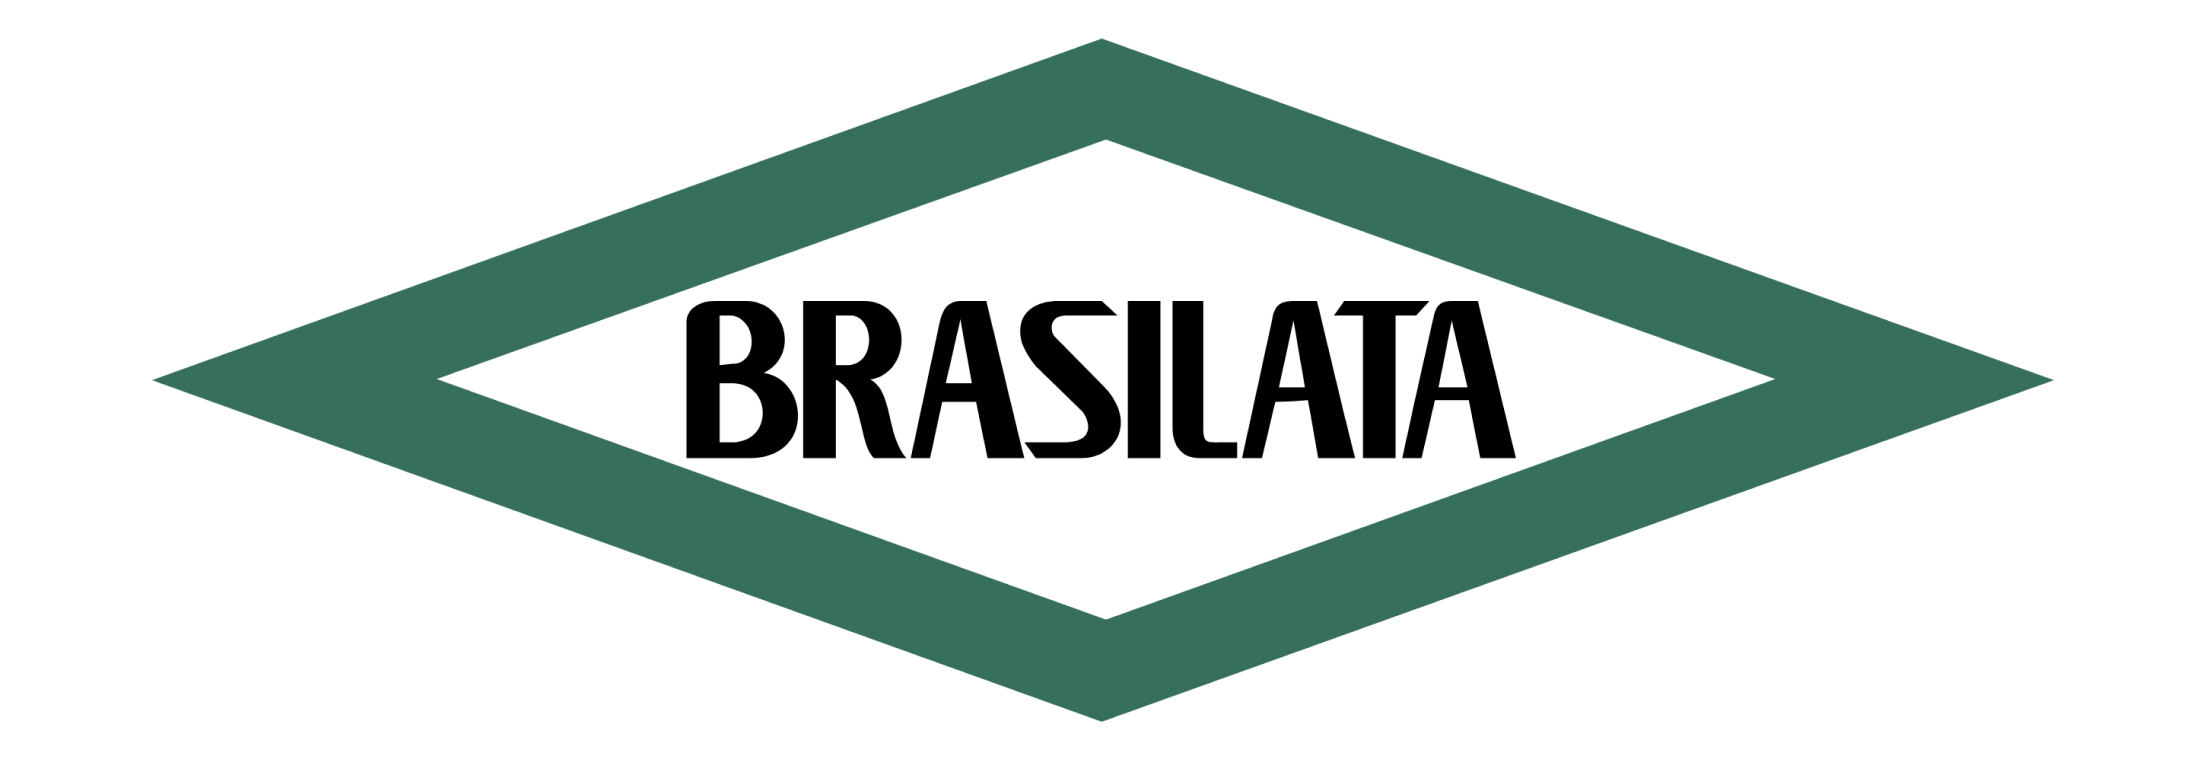 brasilata